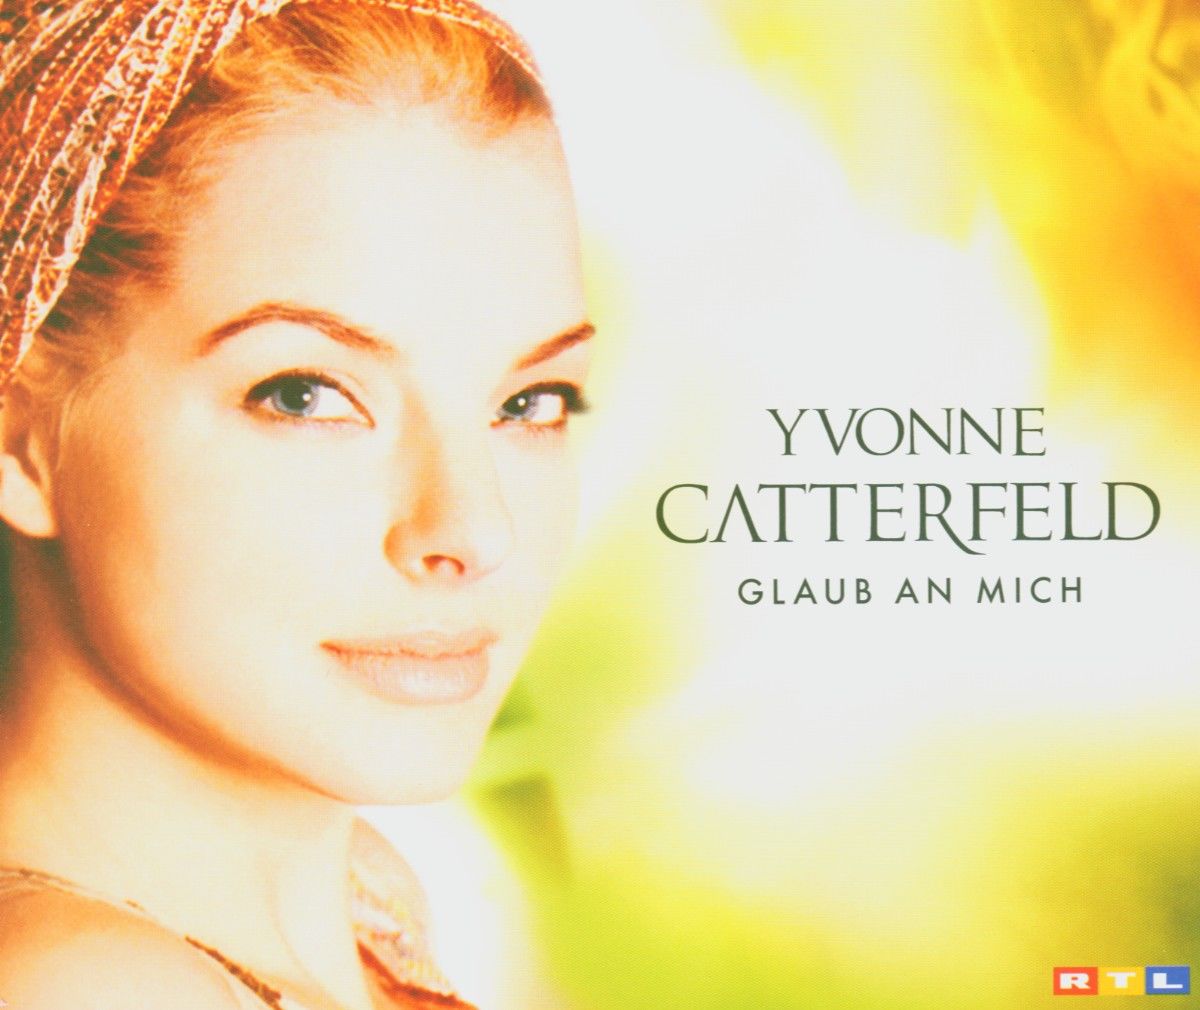 Yvonne Catterfeld — Glaub an mich cover artwork